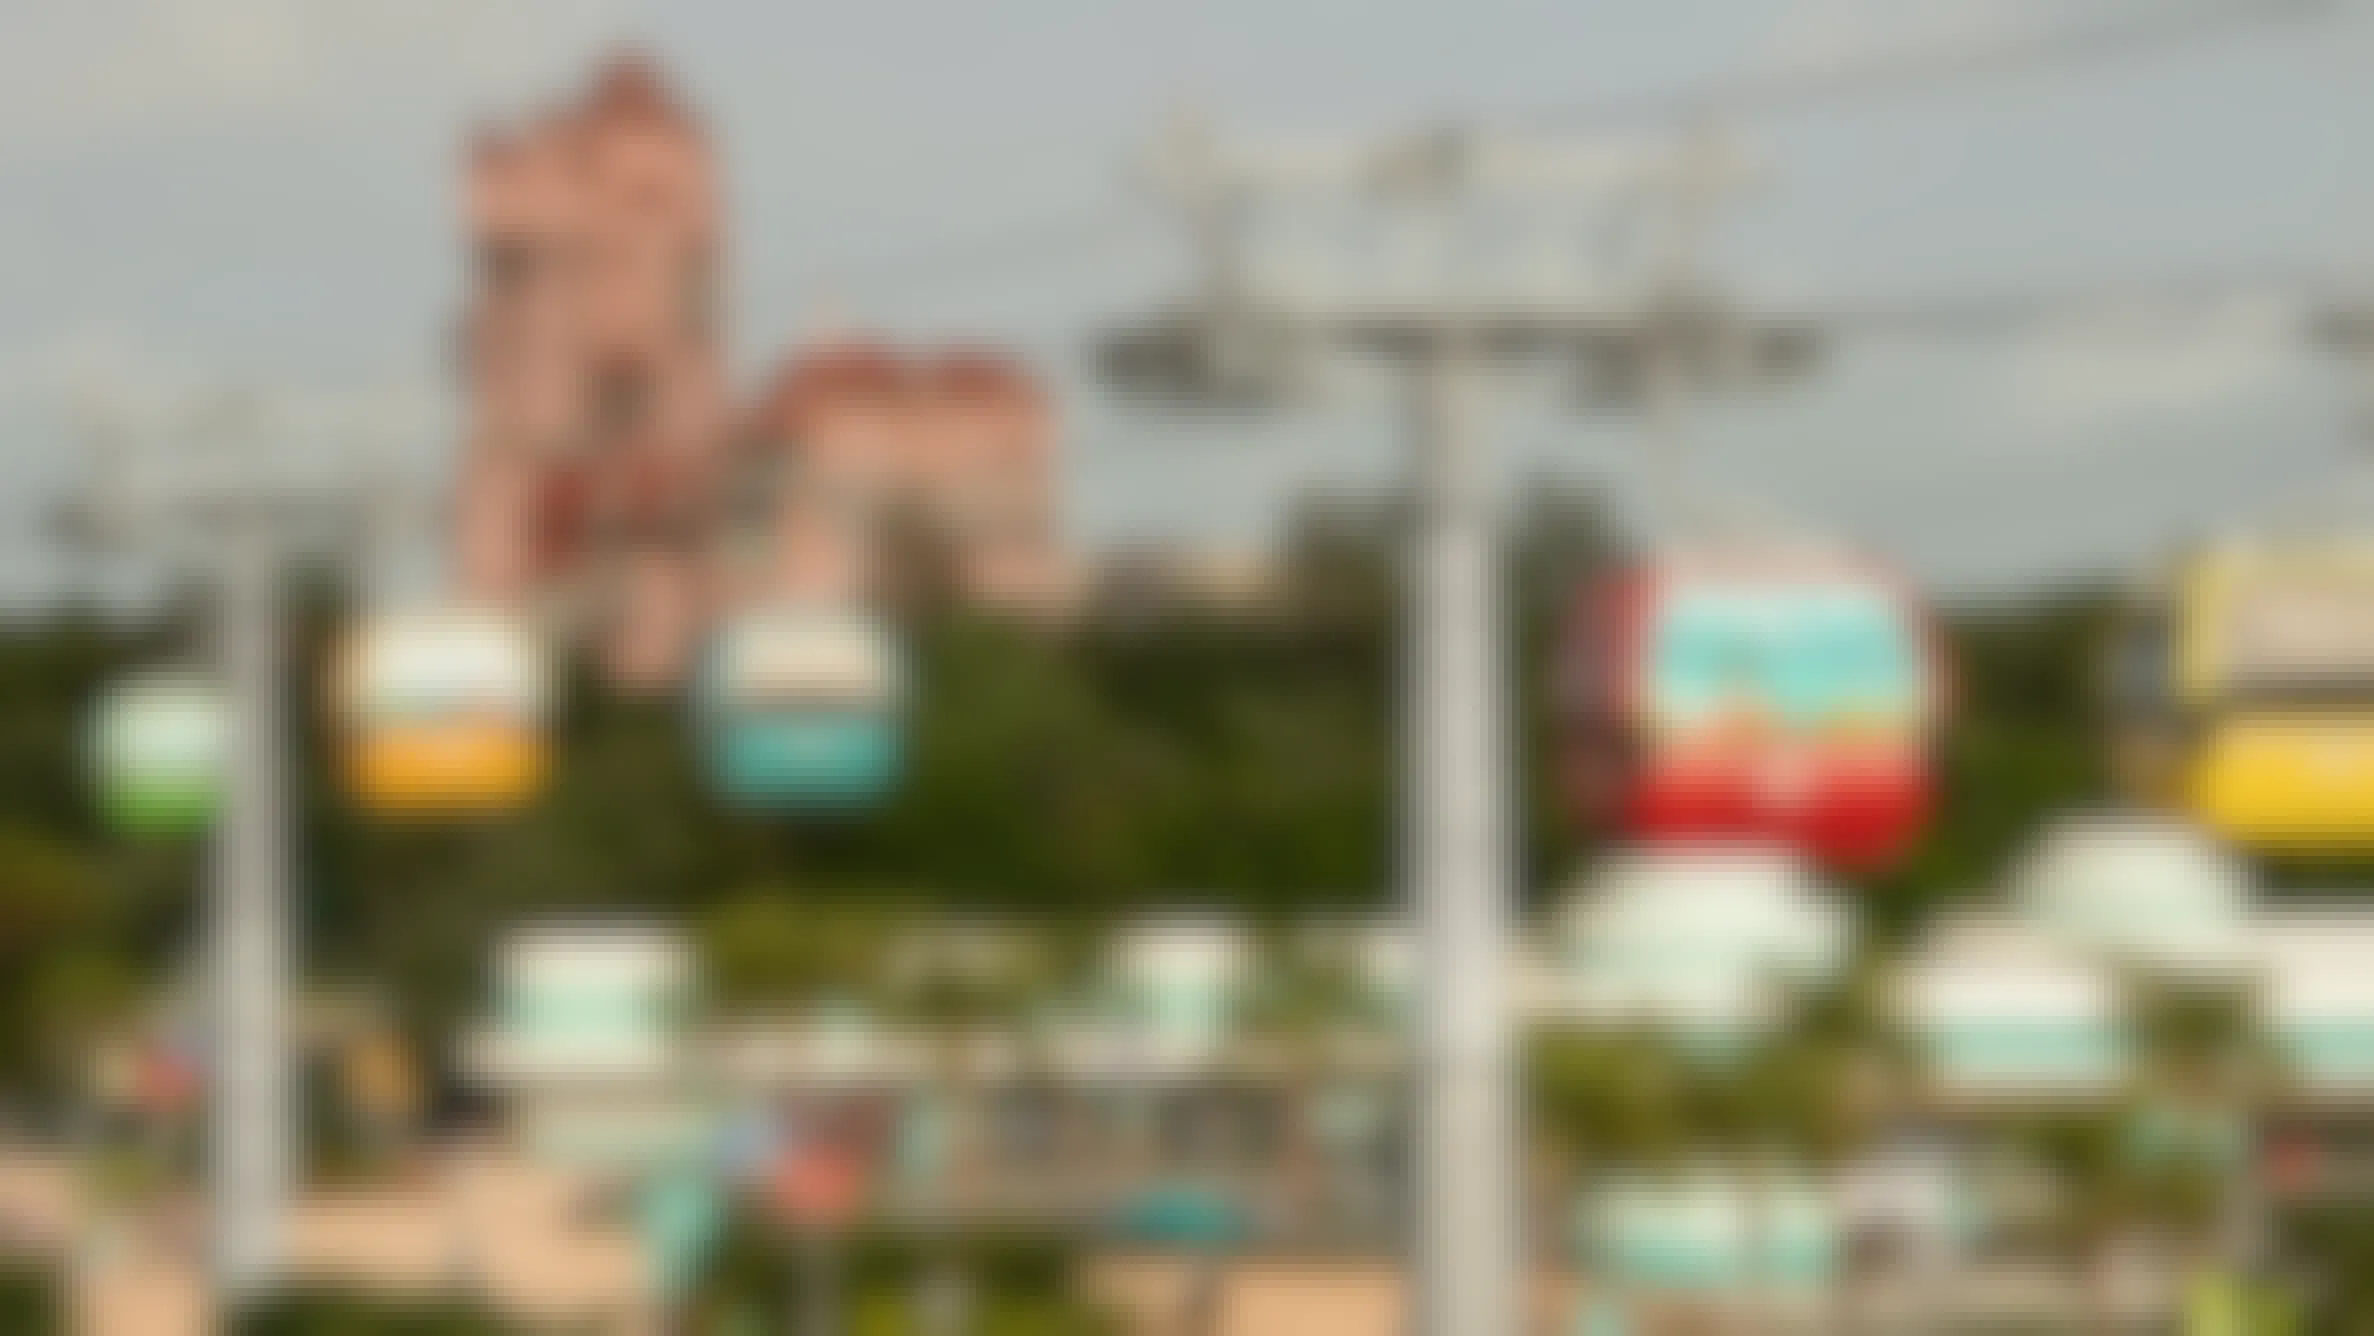 Walt Disney World Disney Skyliner gondola with Tower of Terror in the background